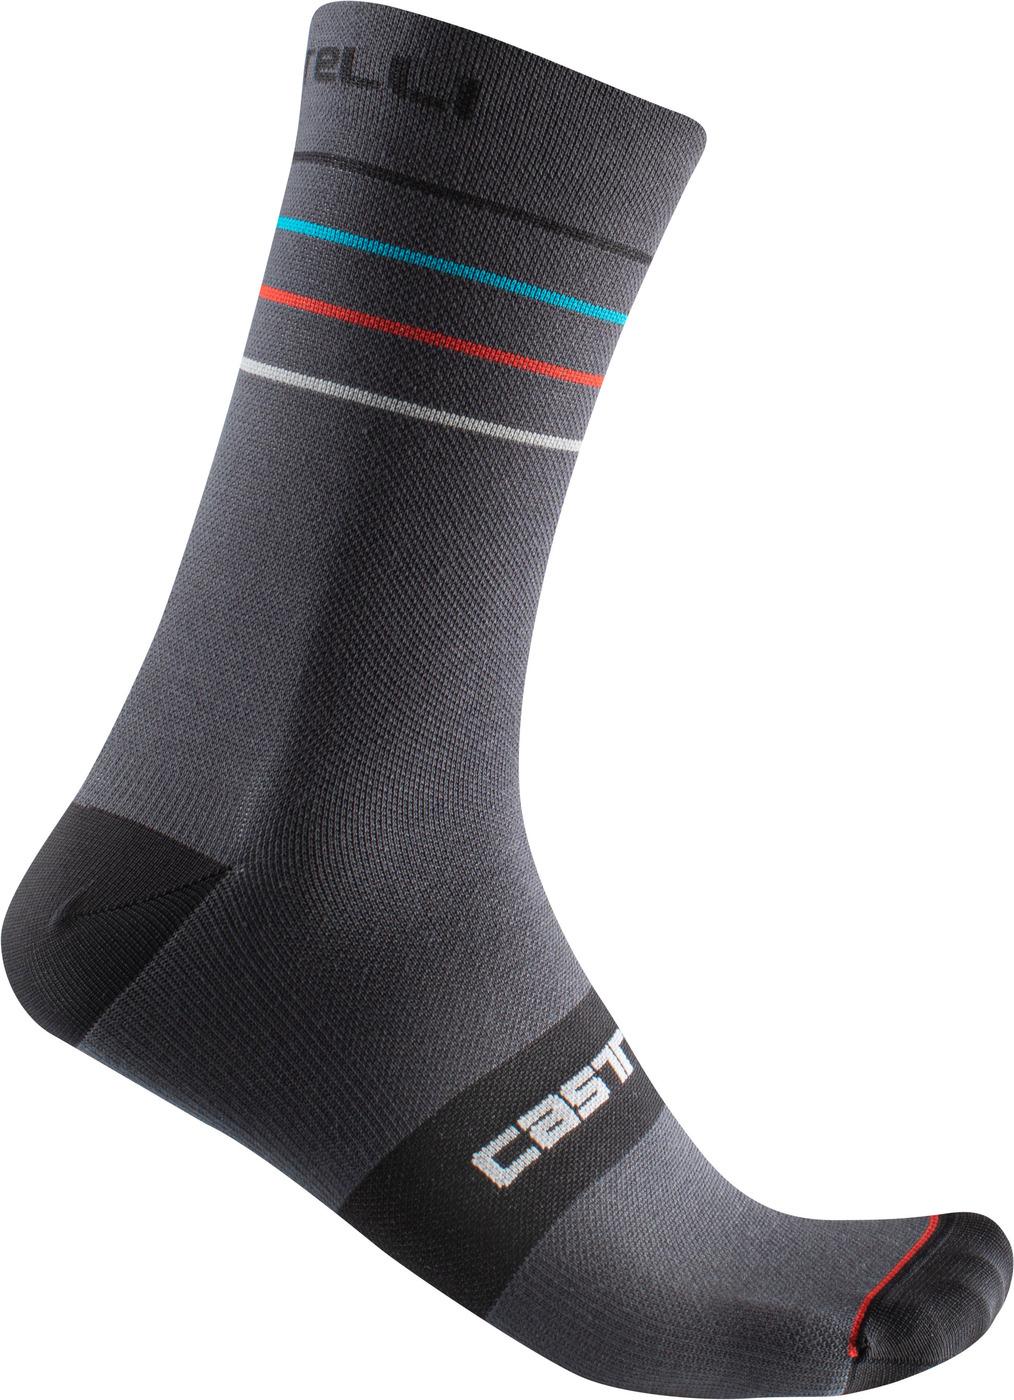 Castelli Endurance 15 Sock - Dark Grey/sky Blue/red